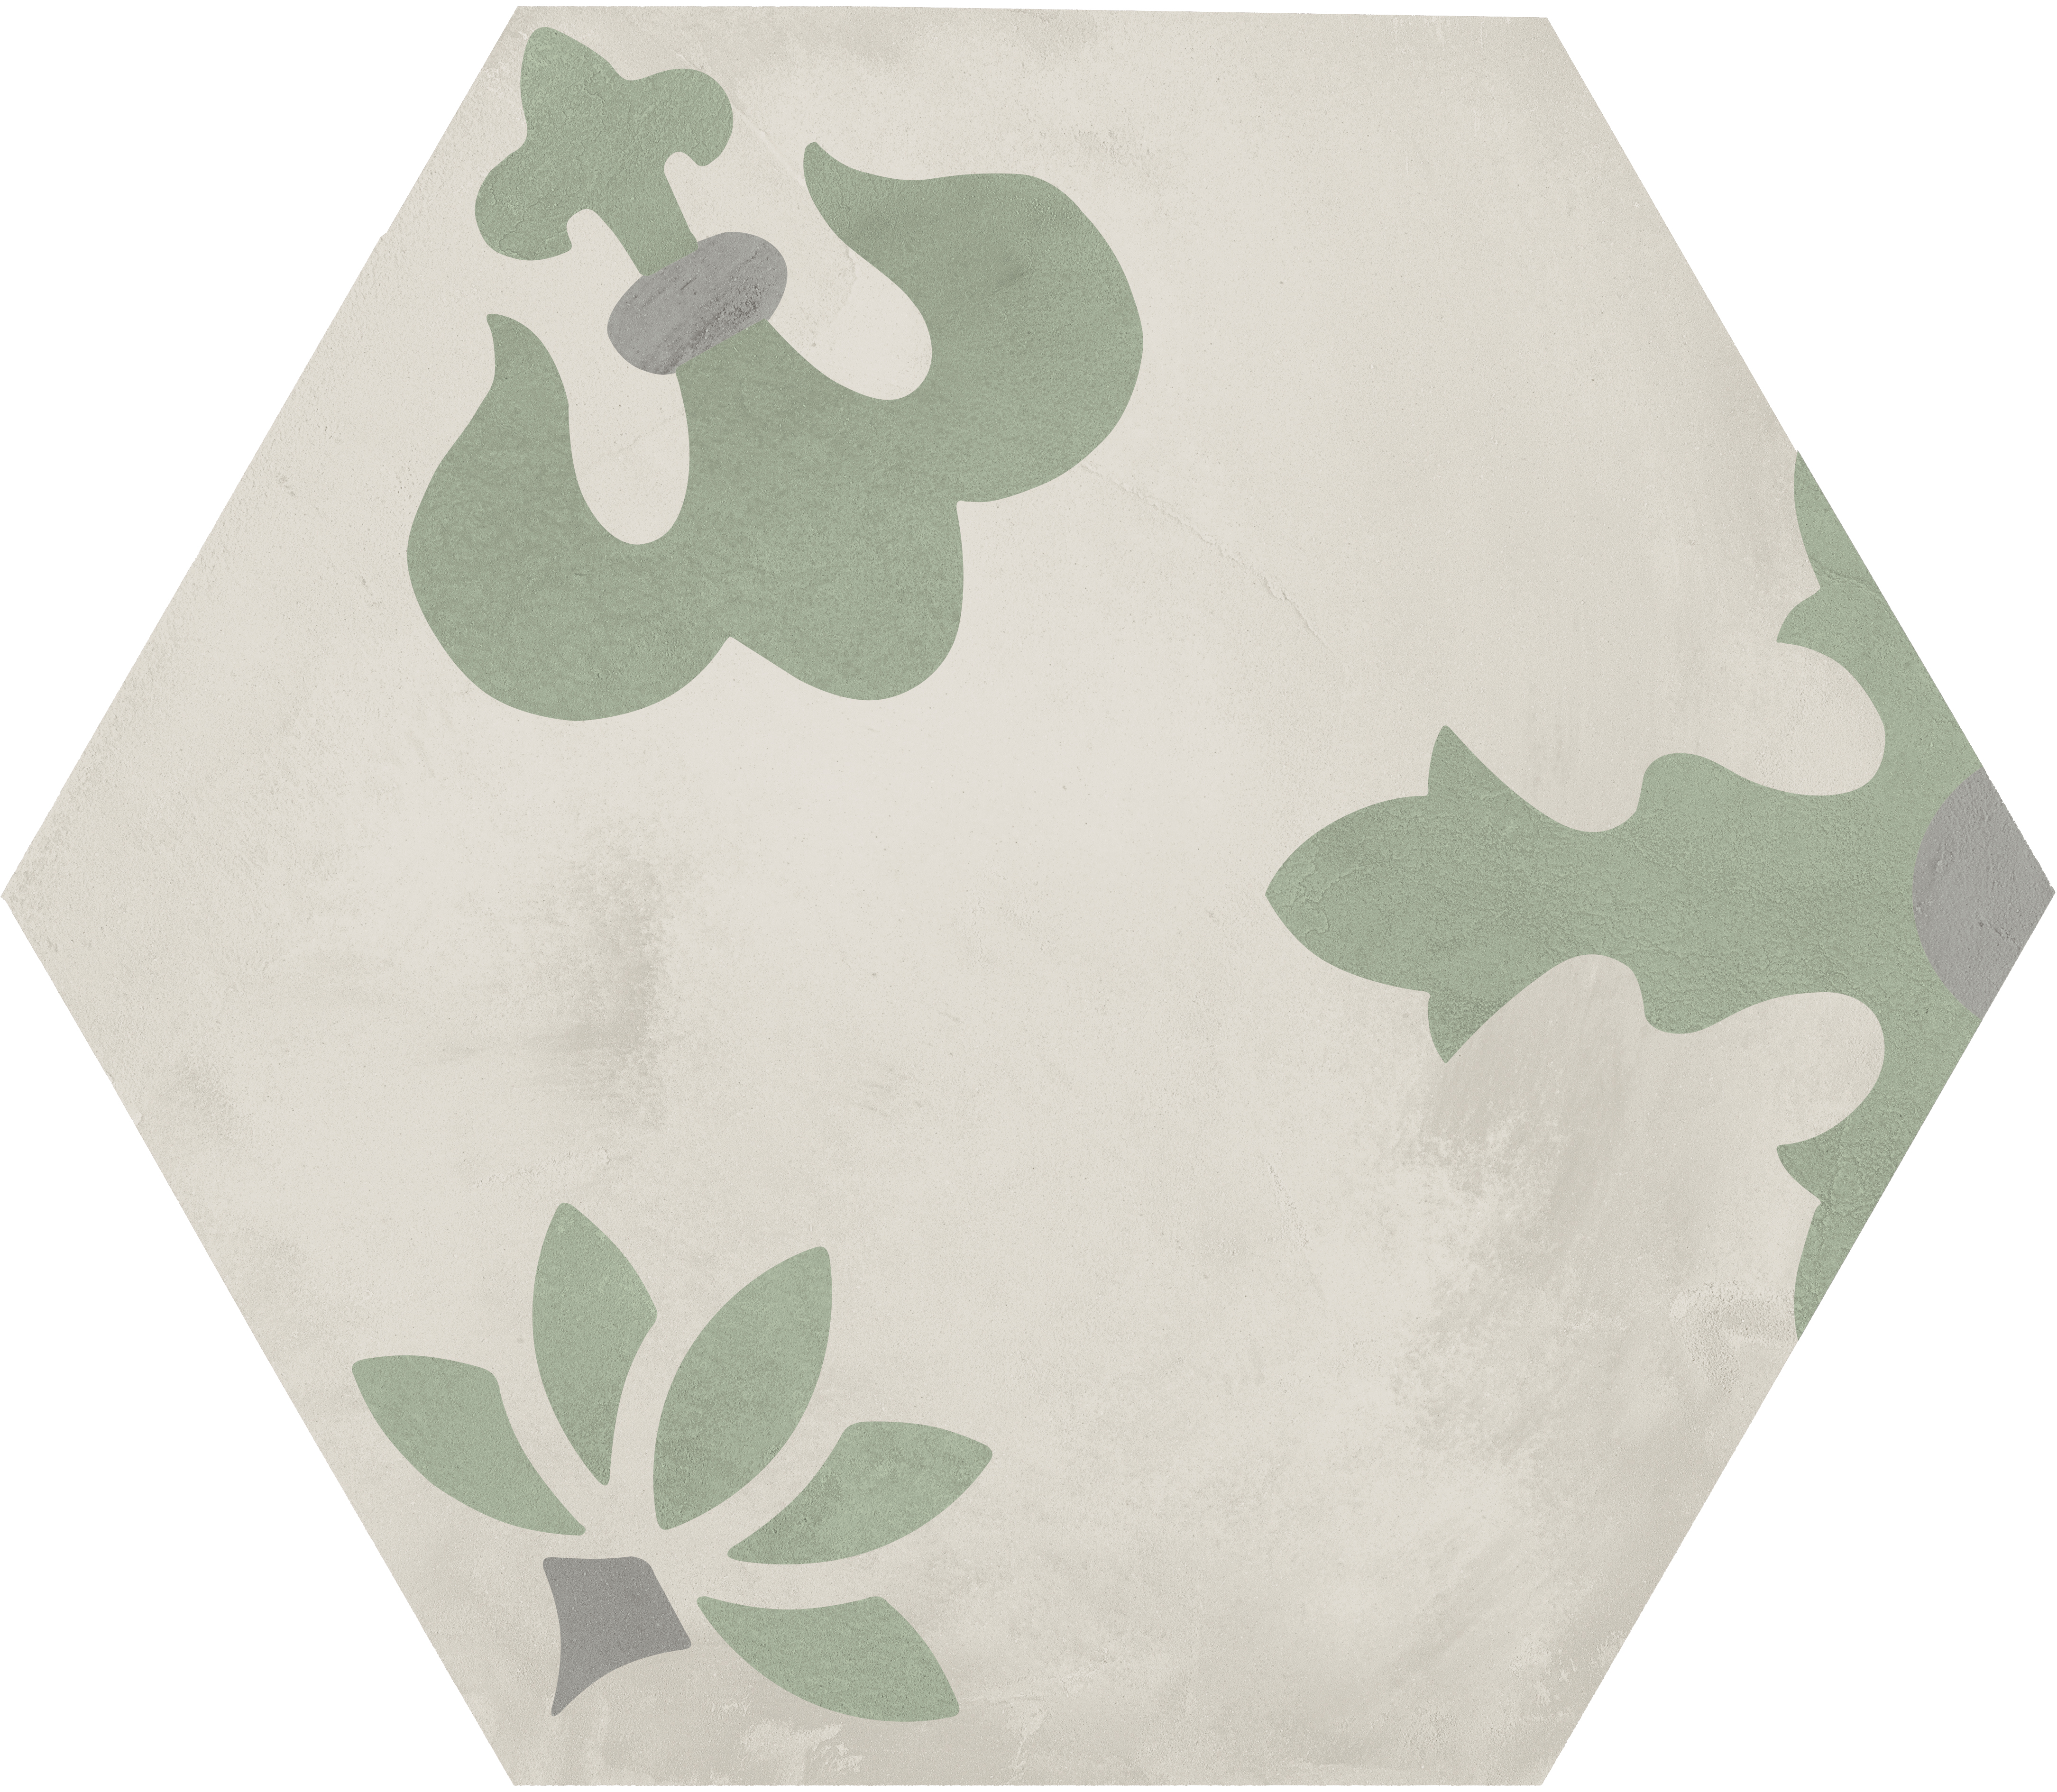 Marcacorona Sabbia – Menta Naturale – Matt Sabbia – Menta I417 matt natur 21,6x25cm Giglio Esagona 9mm